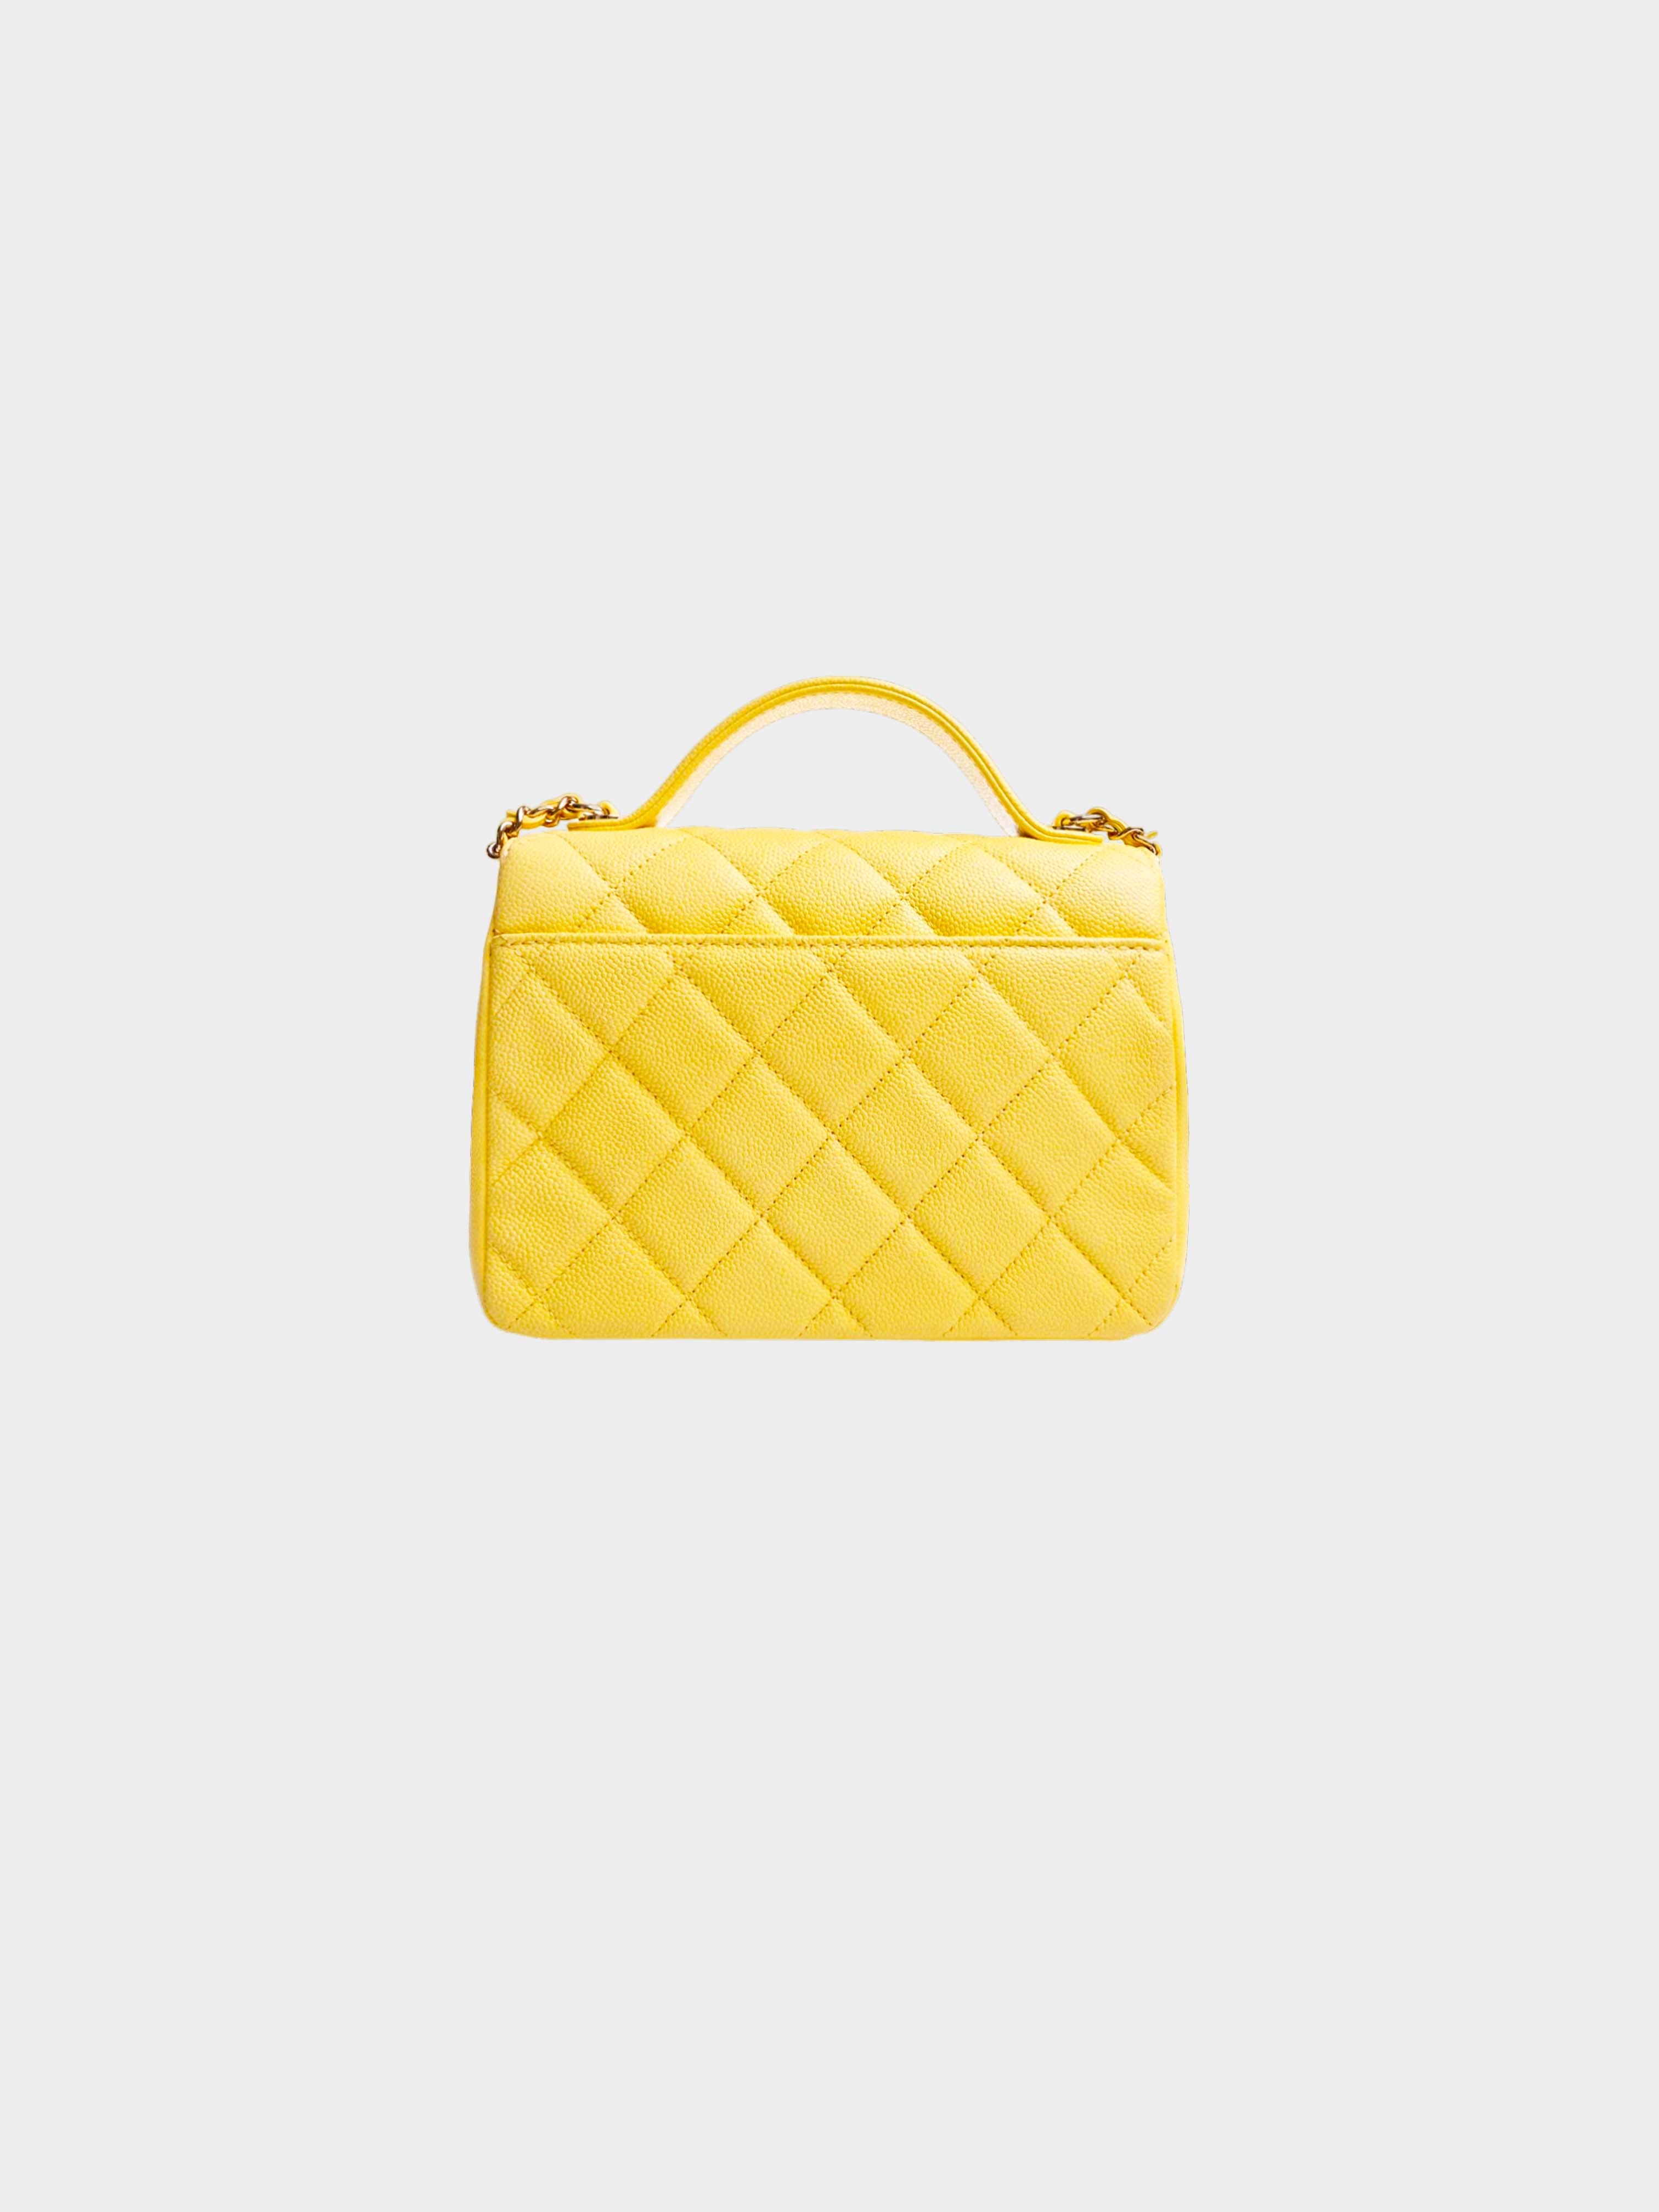 Chanel 2020-2021 Pastel Yellow Caviar Skin 2-Way Shoulder Bag